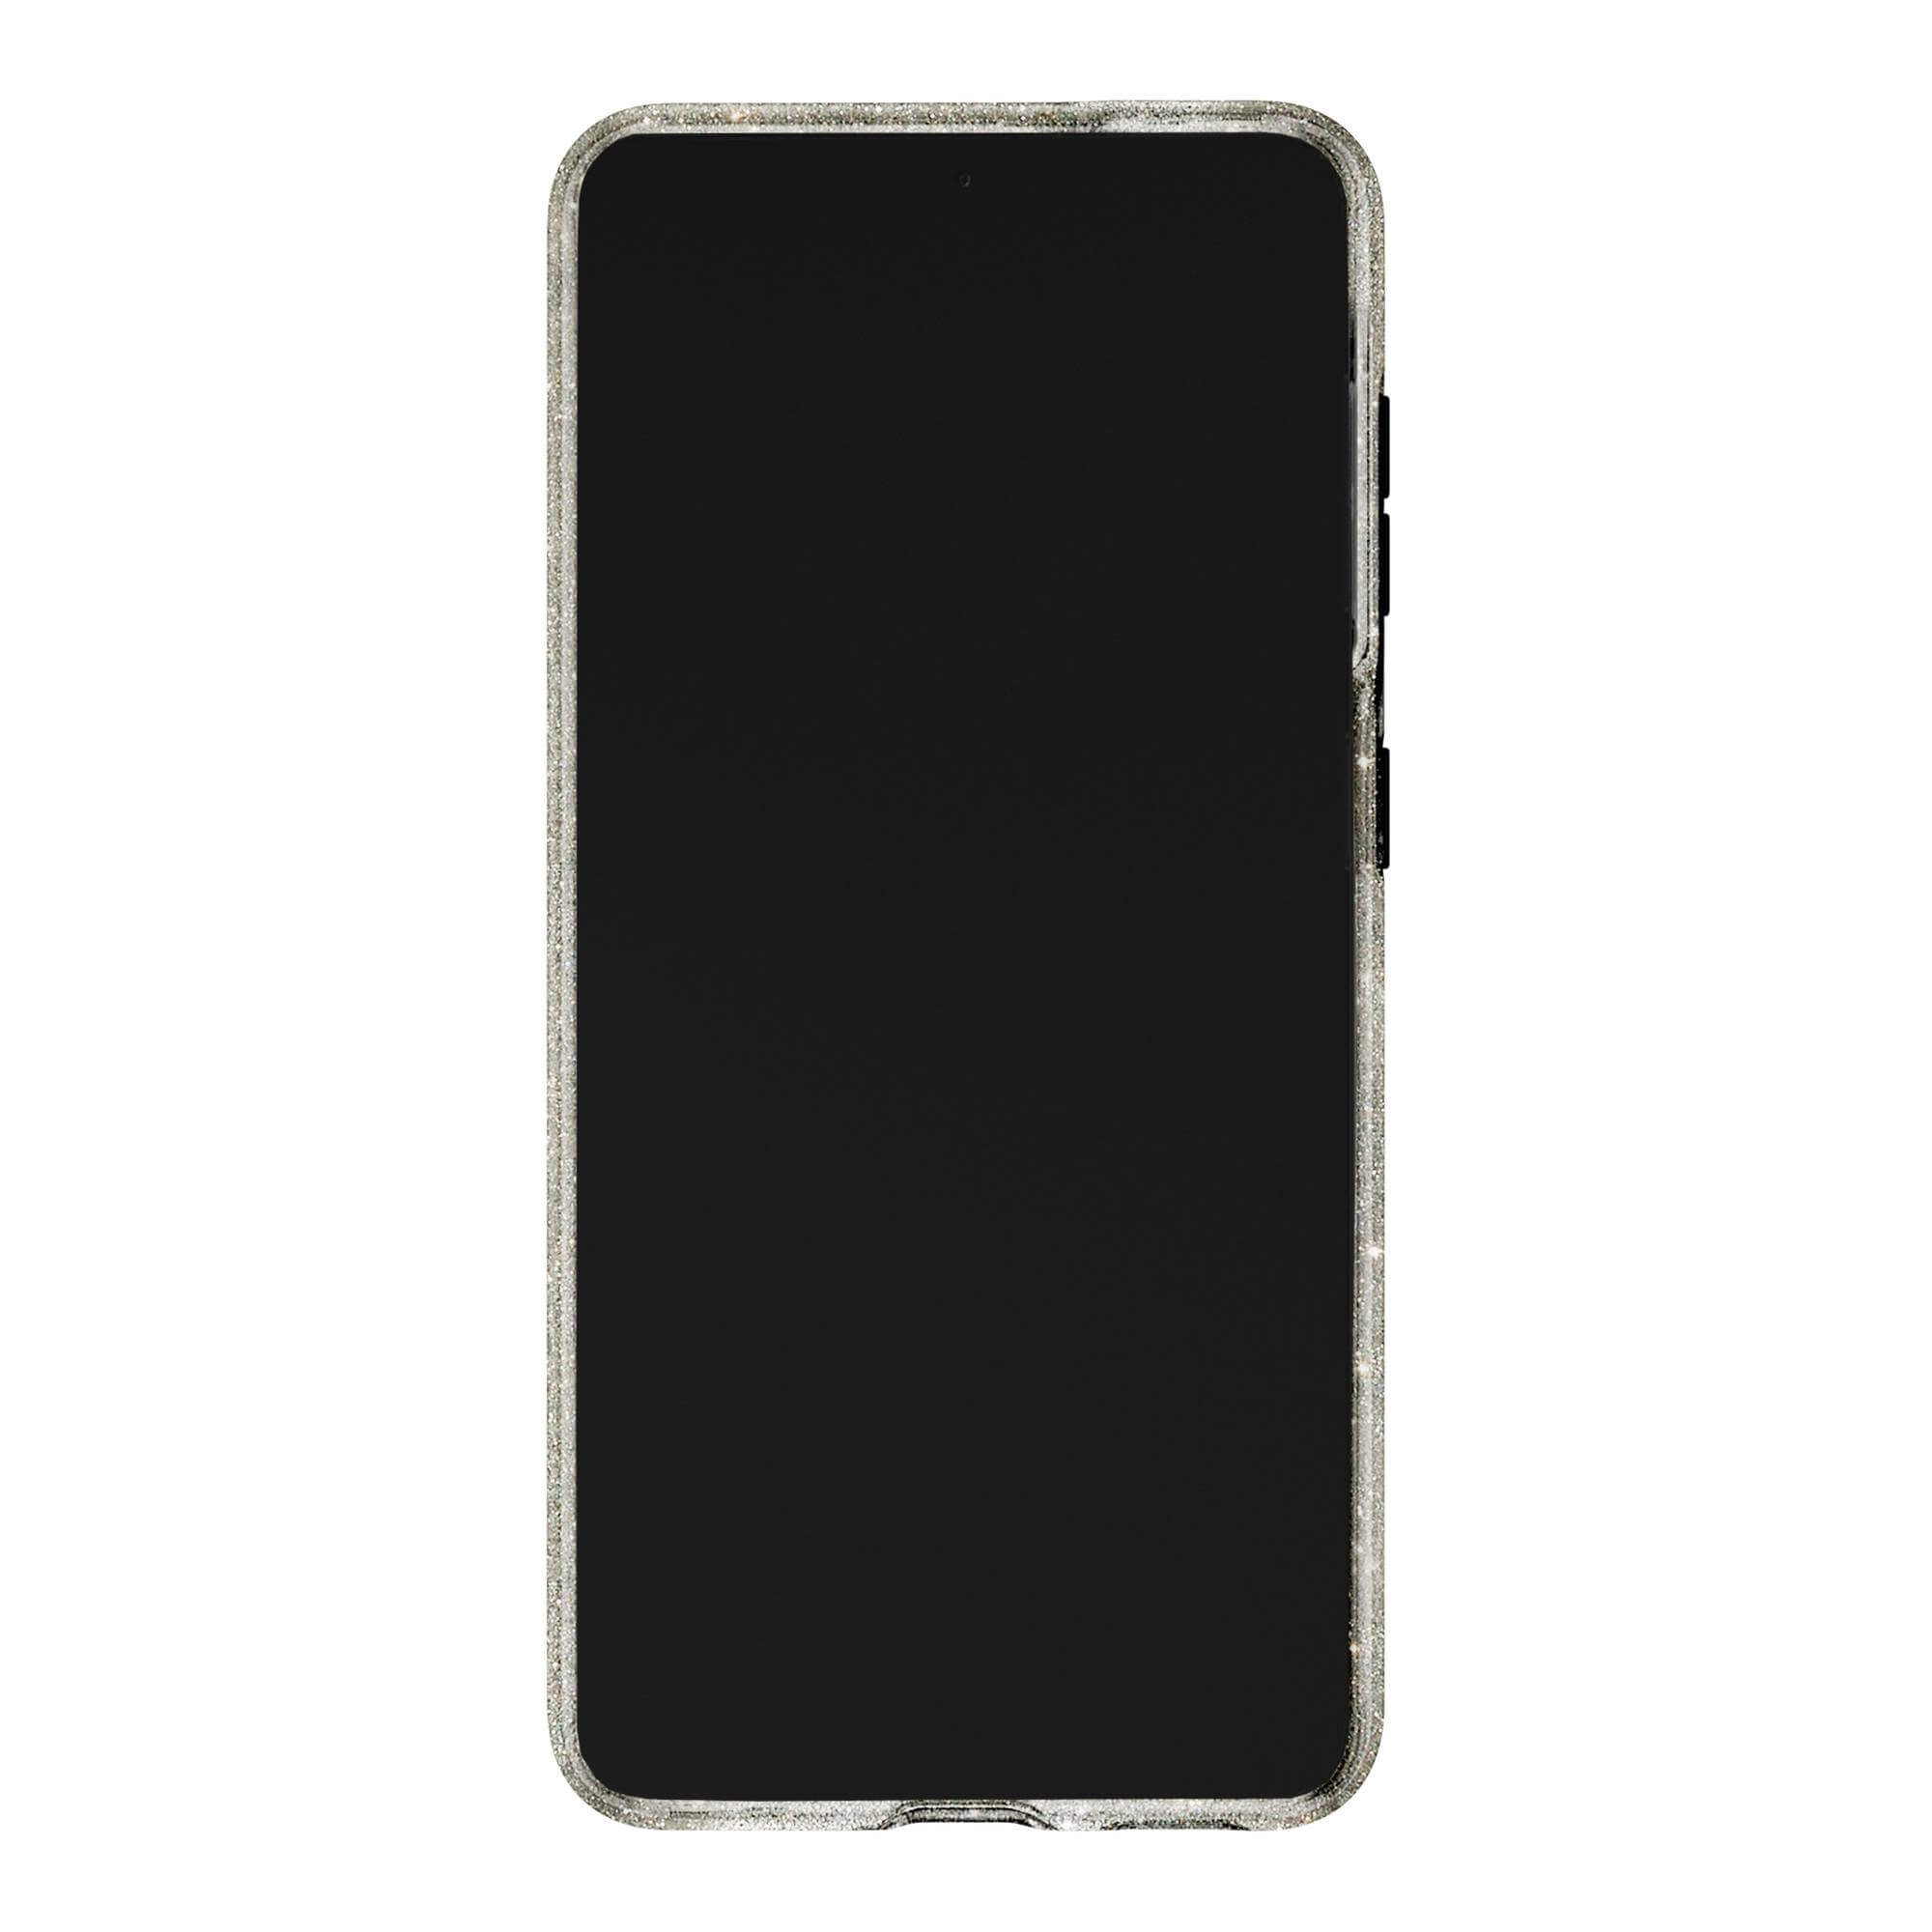 SKECH Backcover, Sparkle, Galaxy Samsung, 5G, snow transparent spark - S22+